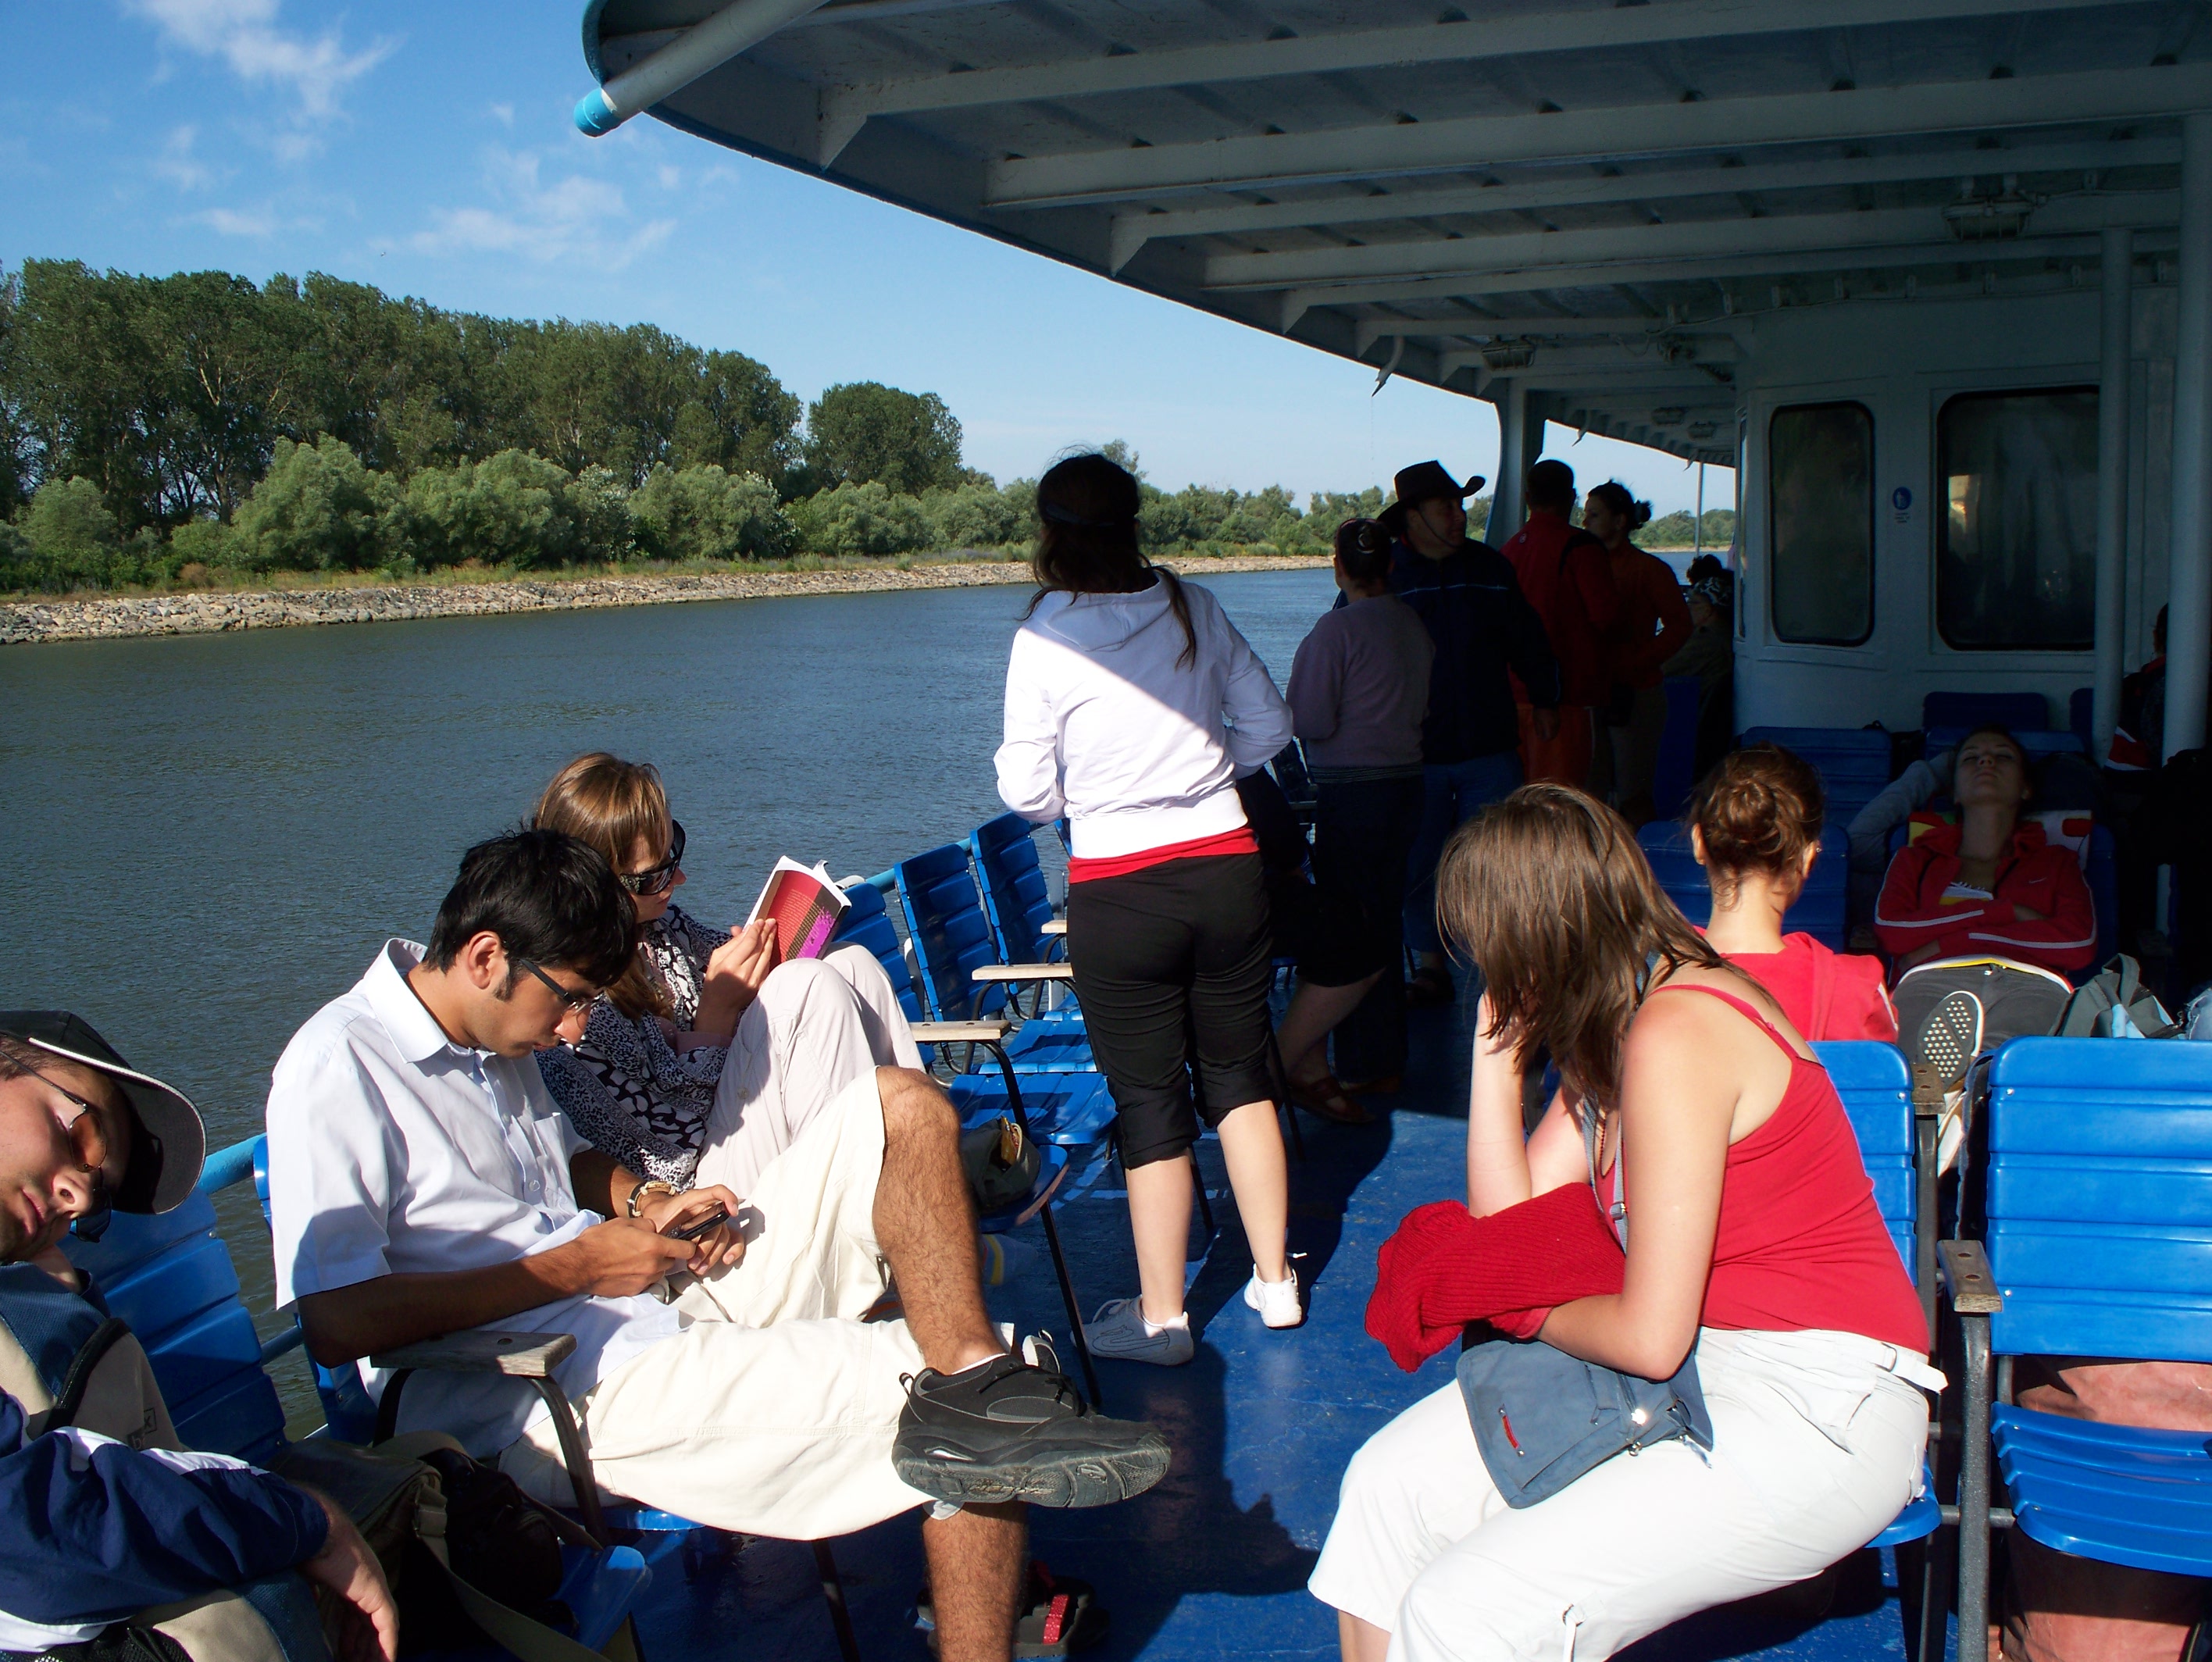 https://upload.wikimedia.org/wikipedia/commons/0/00/Passengers_on_a_Boat.JPG